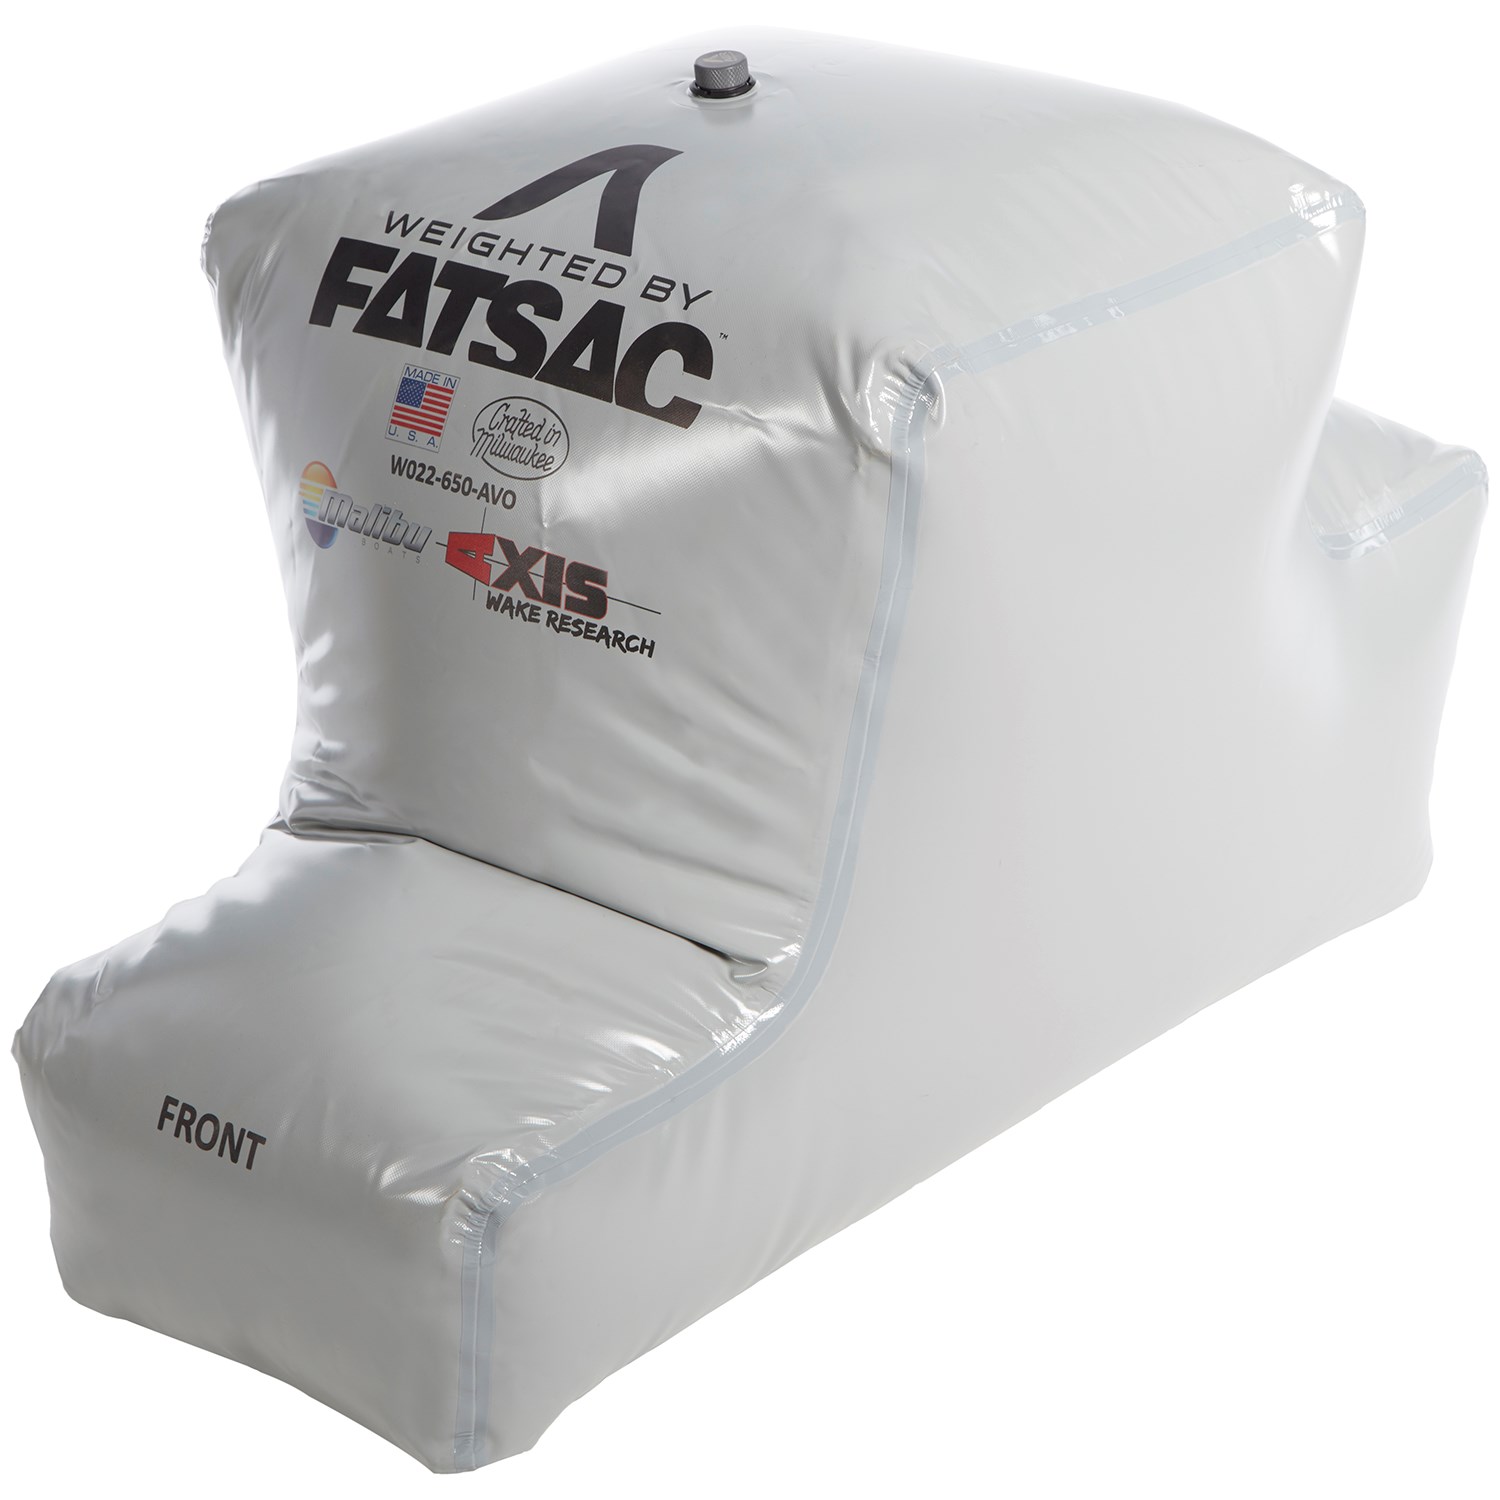 FatSac Weight Bag